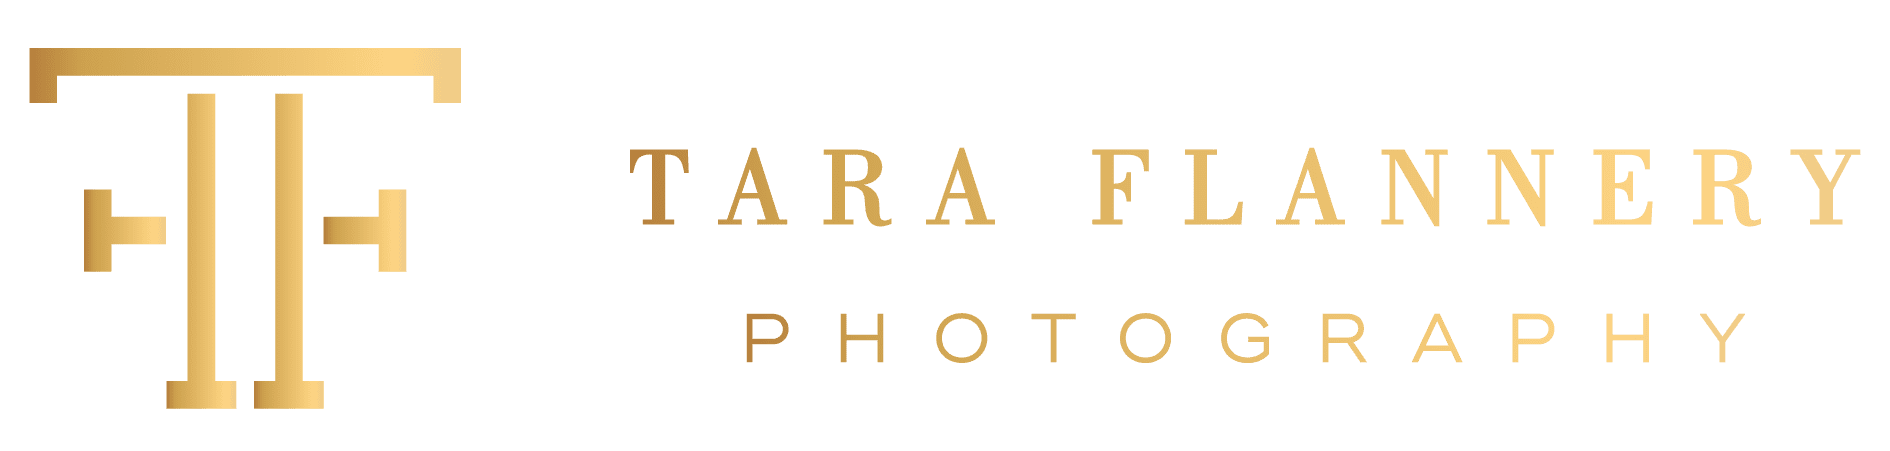 Tara Flannery Photography logo